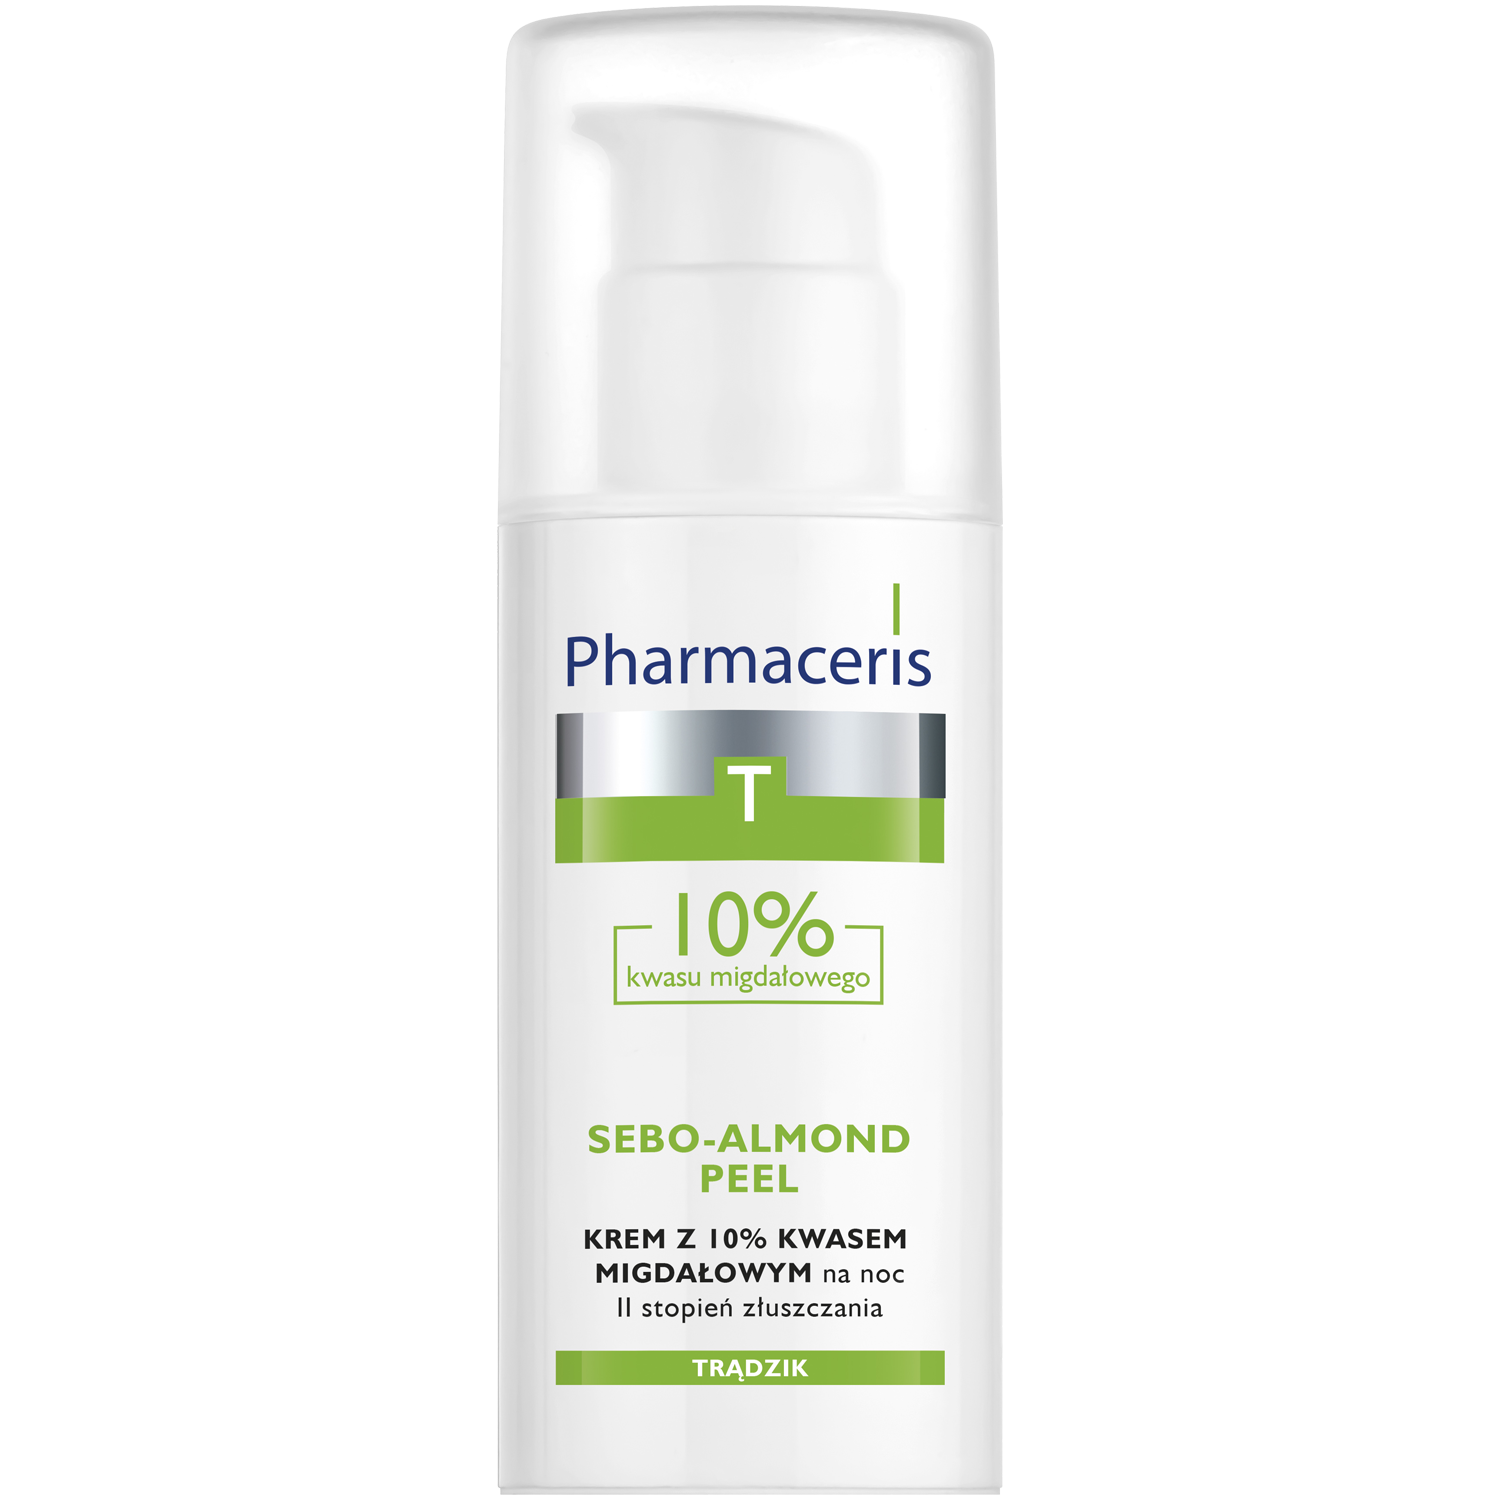 Pharmaceris T Sebo-Almond Peel 10% ночной крем с 10% миндальной кислотой II степени отшелушивания, 50 мл pharmaceris t sebo almond claris cleasing solution 190 ml